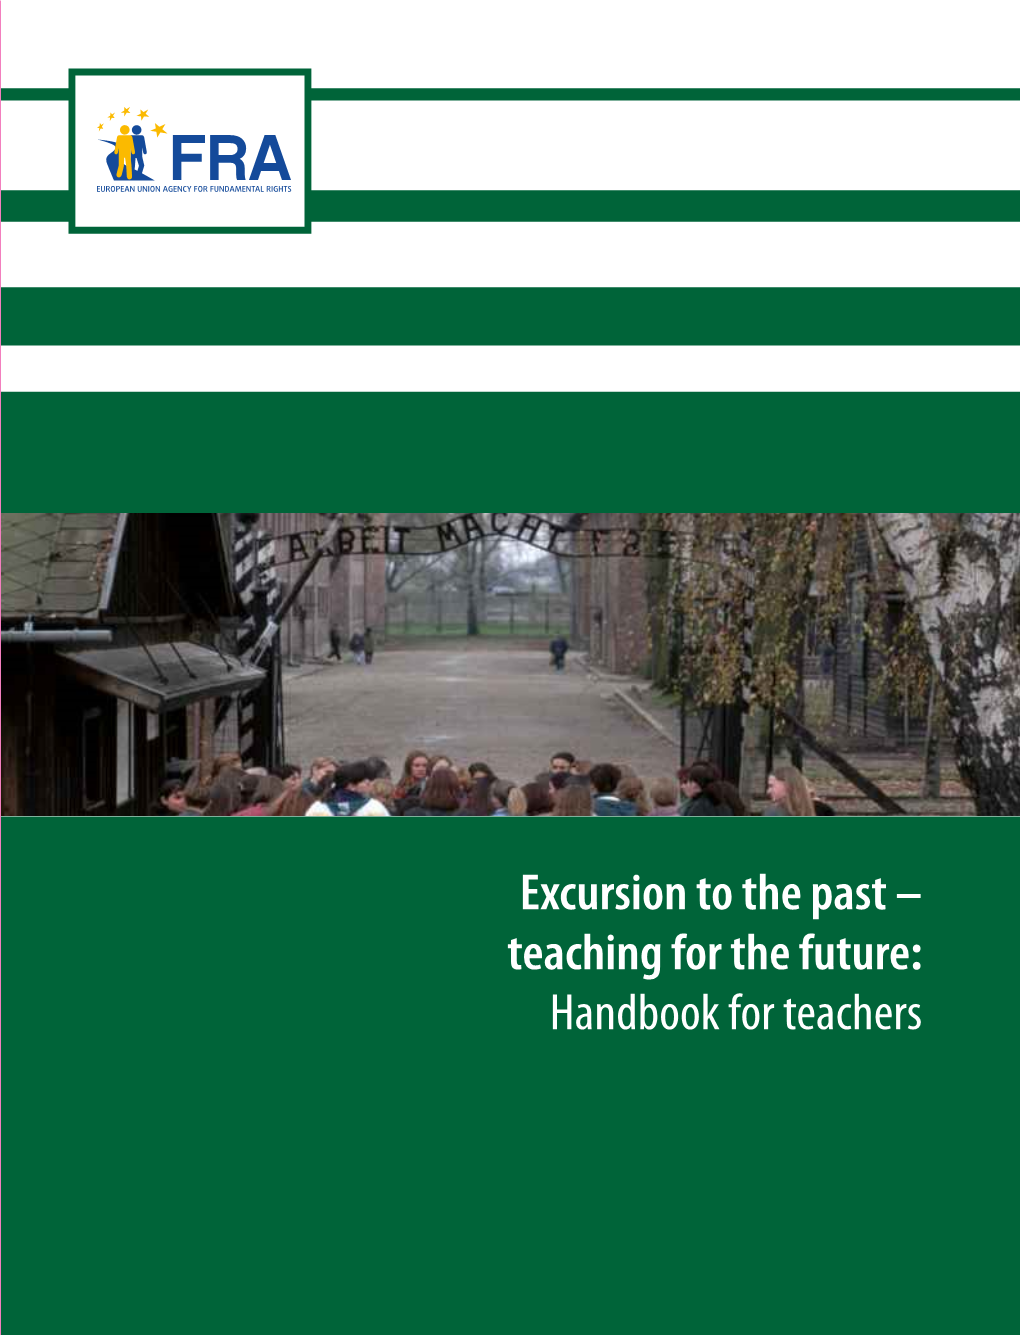 Teaching for the Future: Handbook for Teachers